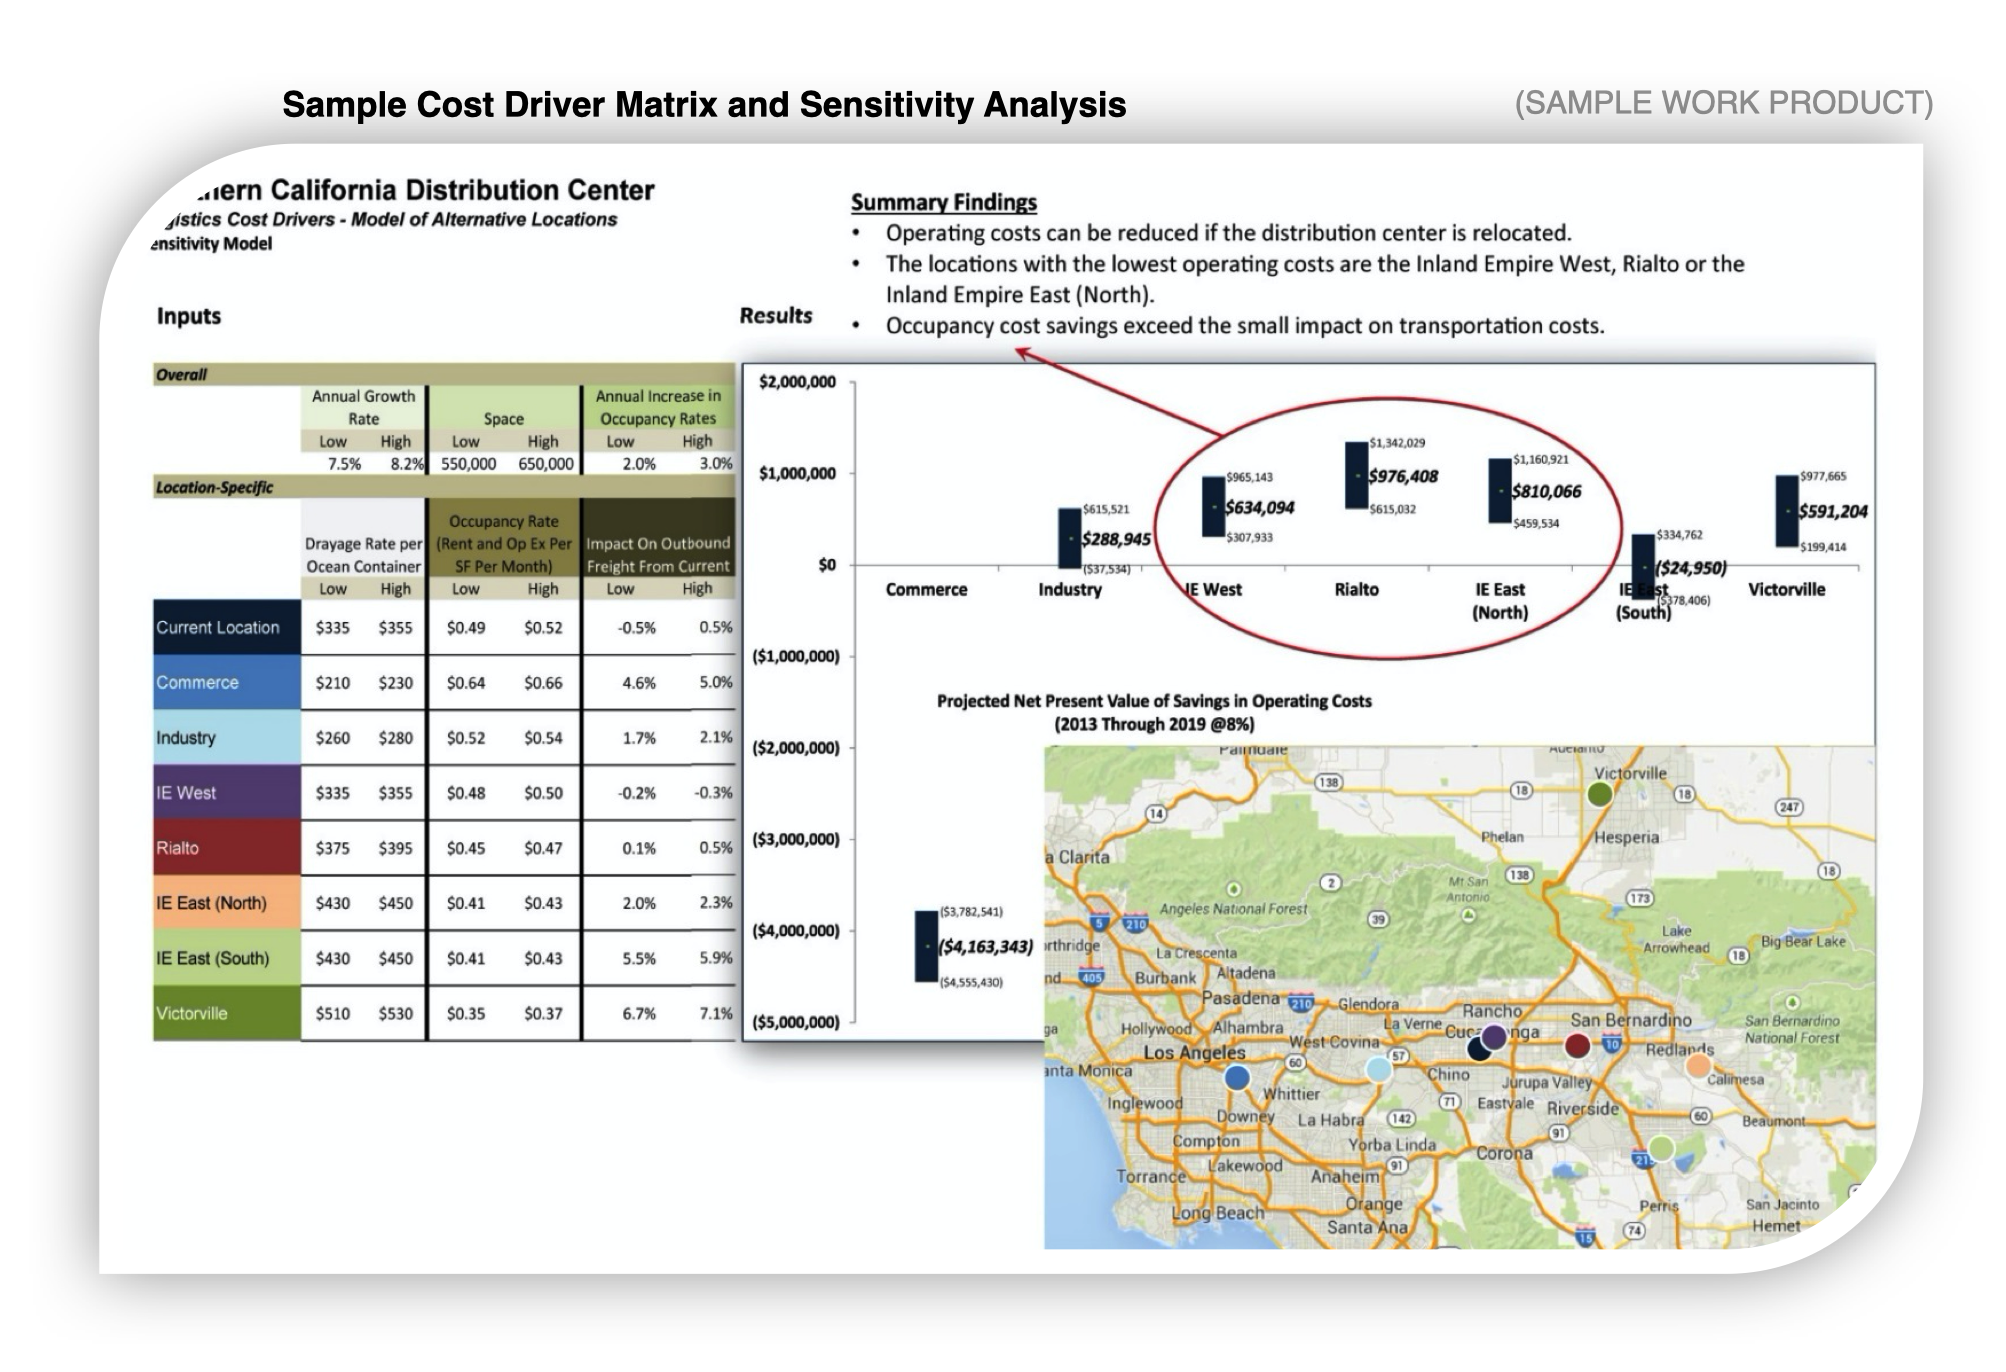 A sample cost driver matrix and sensitivity analysis